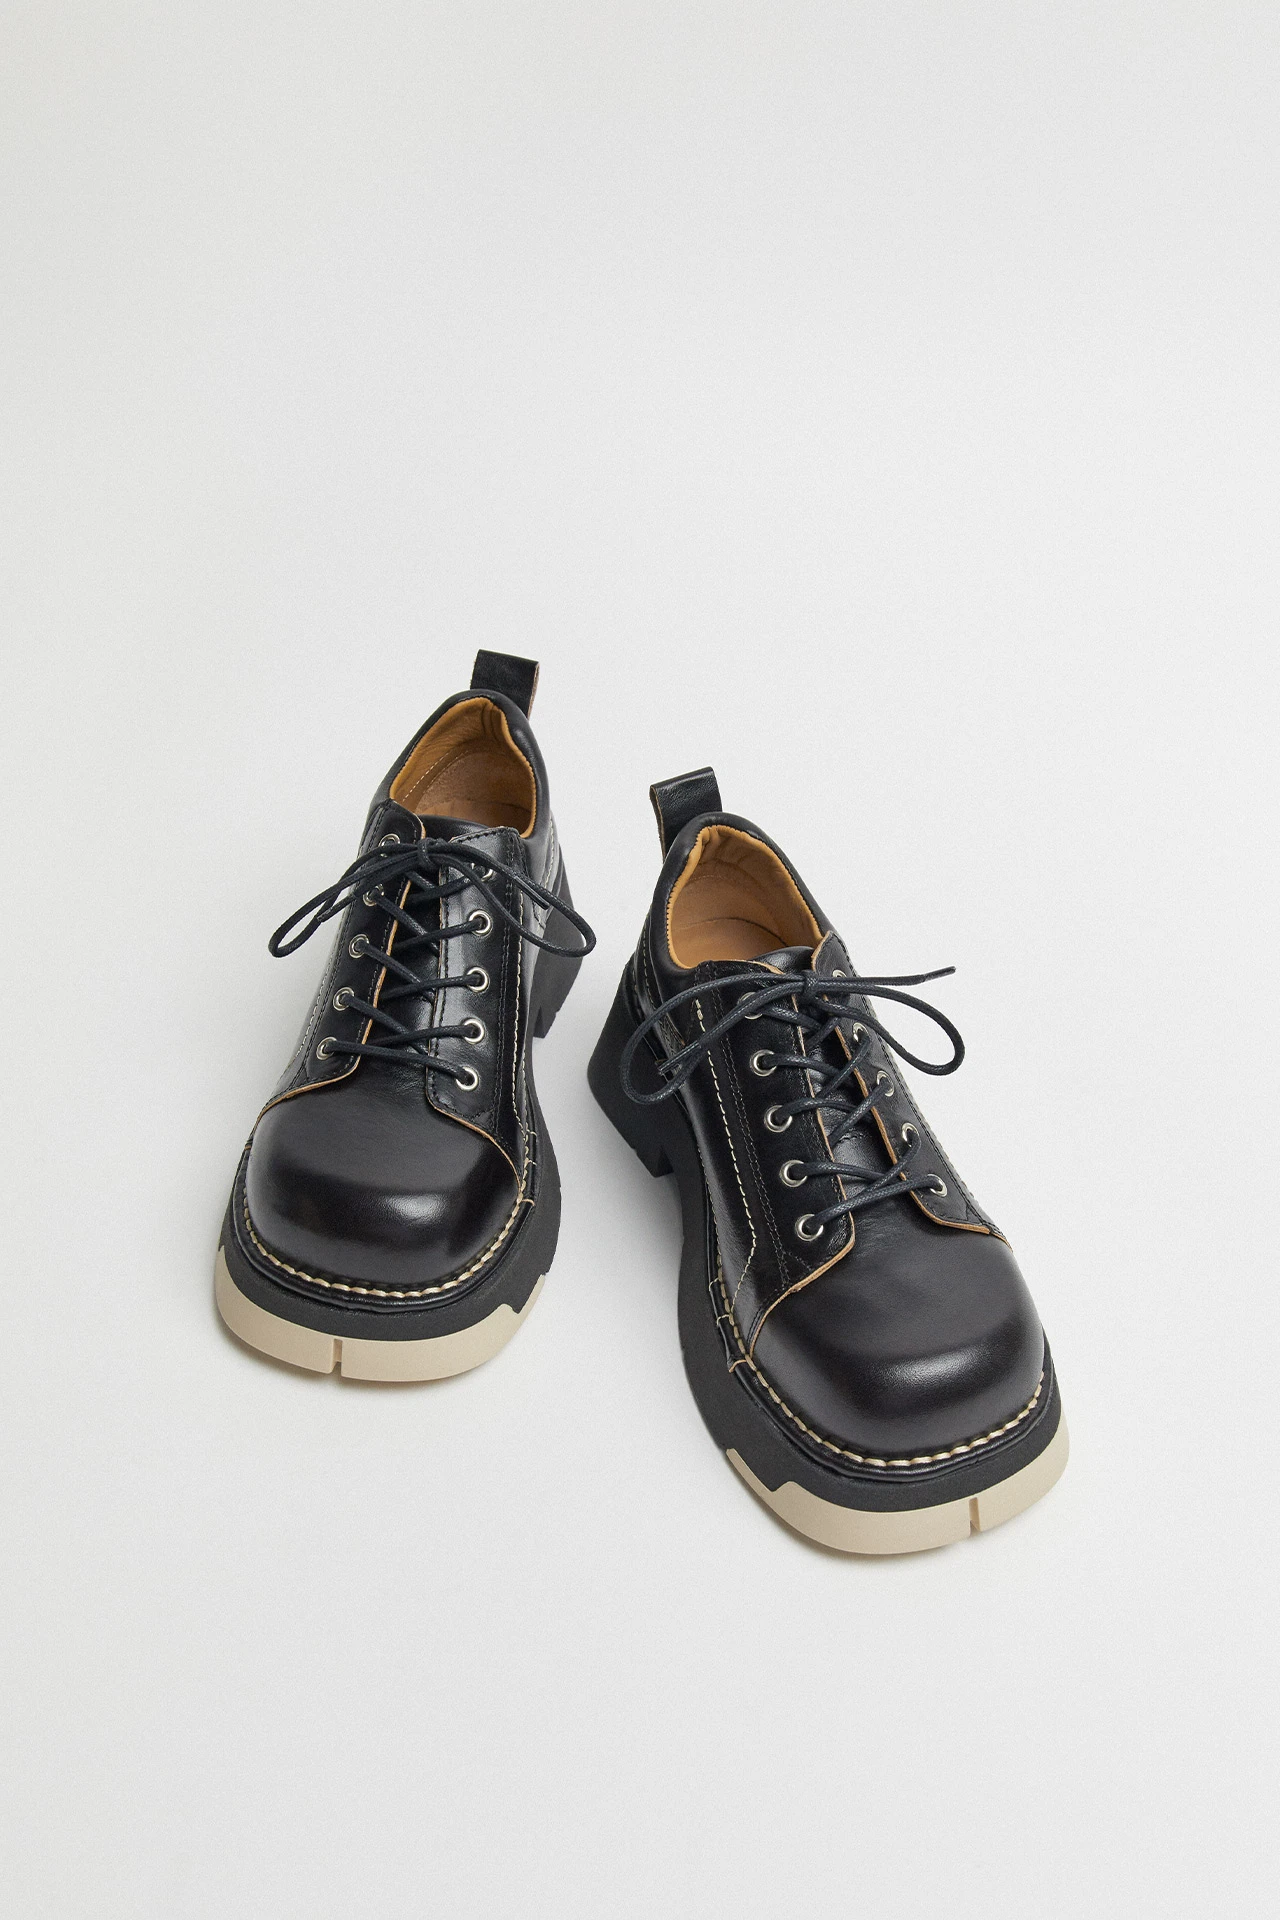 Miista-erina-black-ankle-boots-04